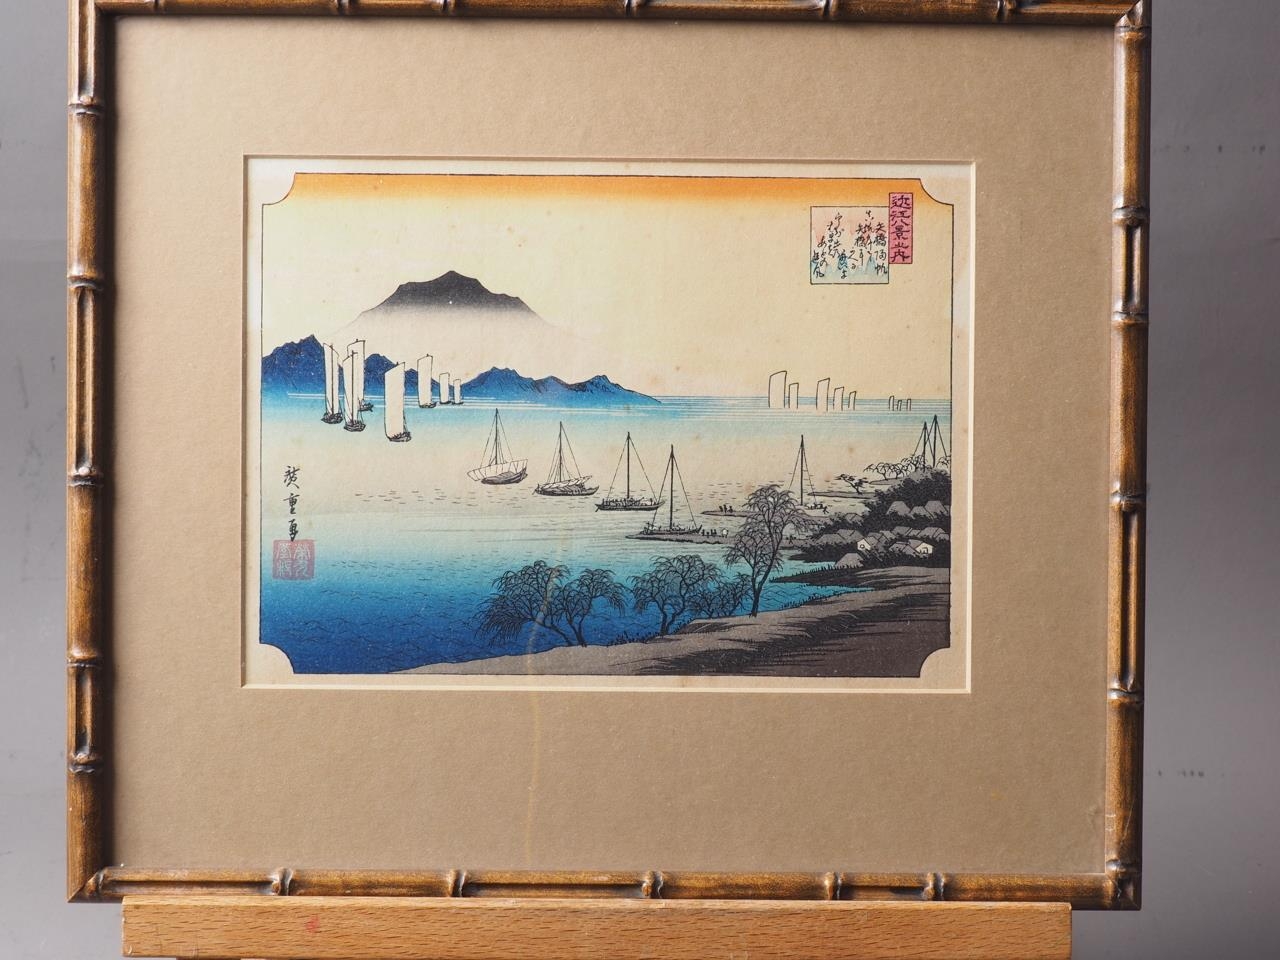 Utagawa Hiroshige: a Japanese wood block print, "Fishing Boats returning to Yabase", in faux